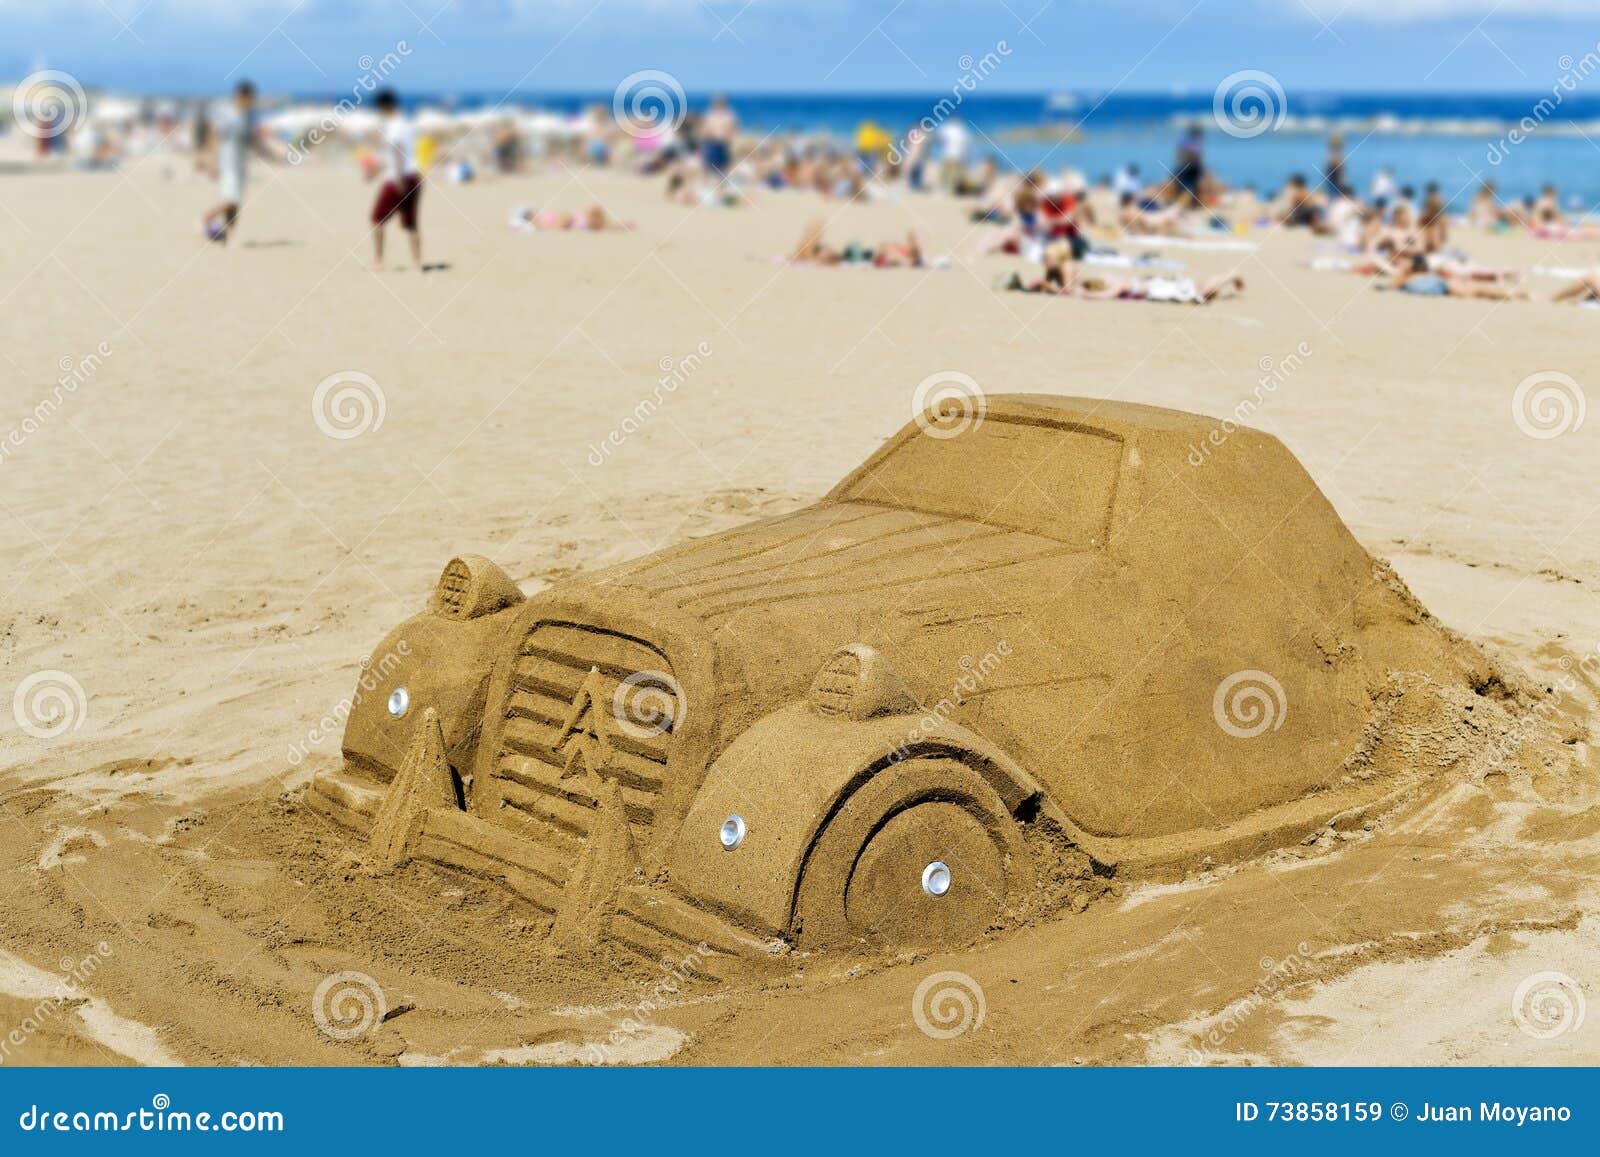 sand sculpture at la barceloneta beach, in barcelona, spain